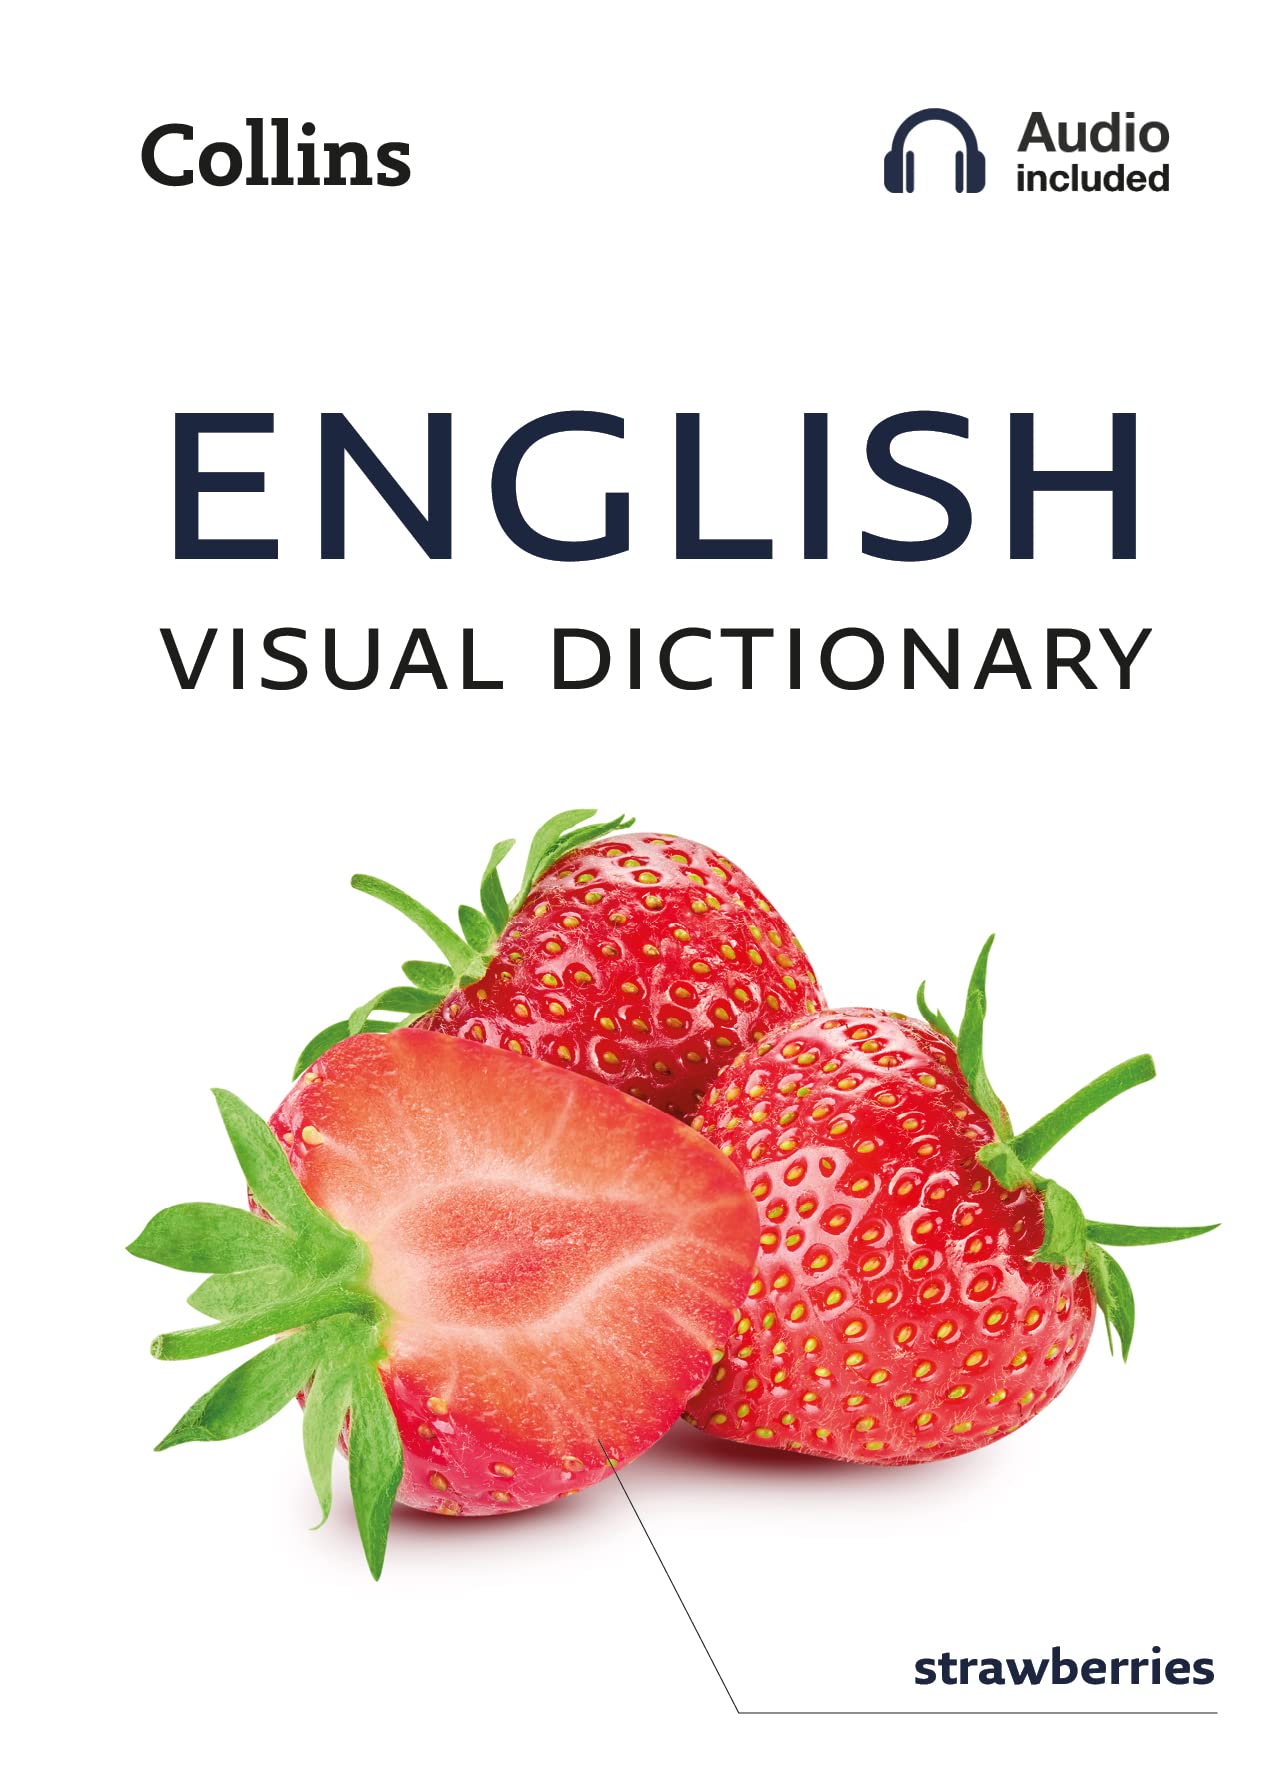 Collins Visual Dictionary: English